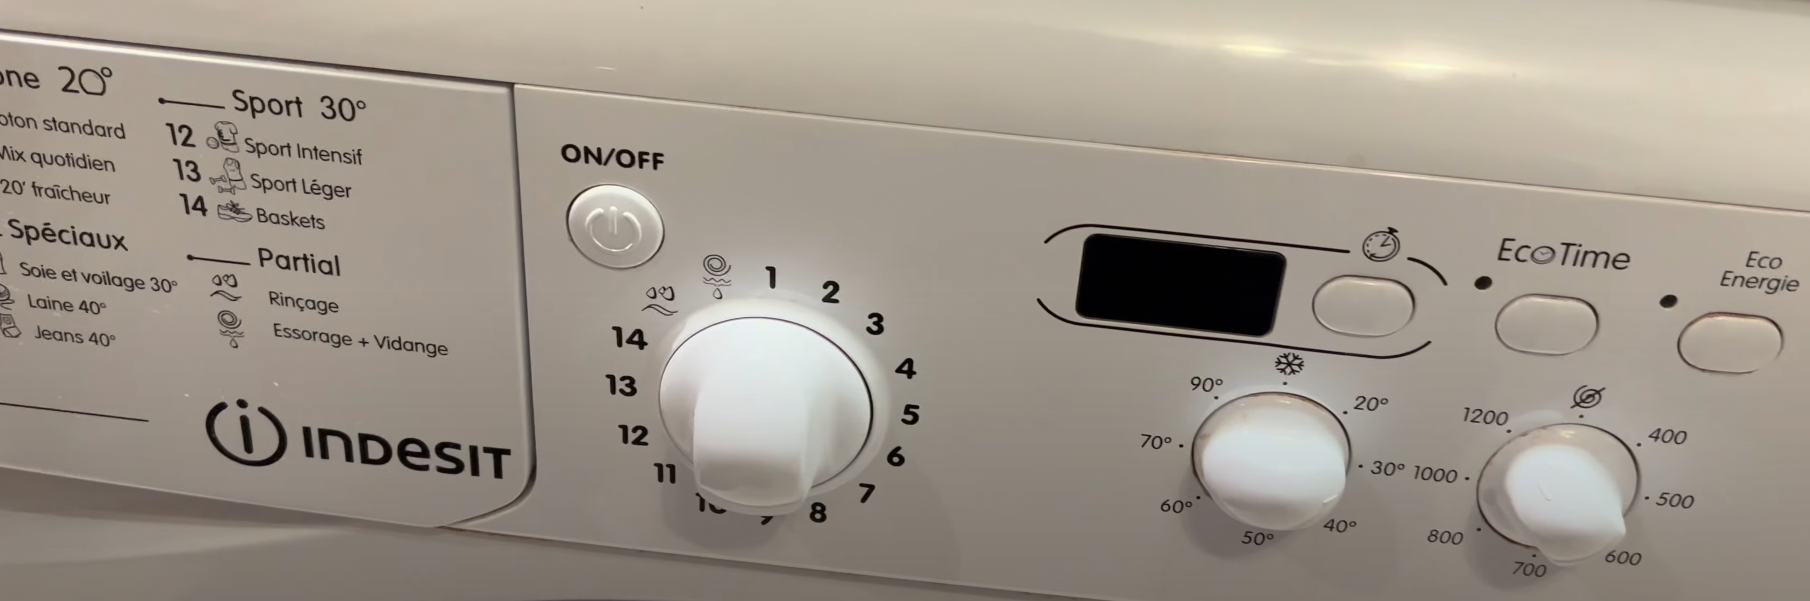 Indesit Washing Machine with control panel